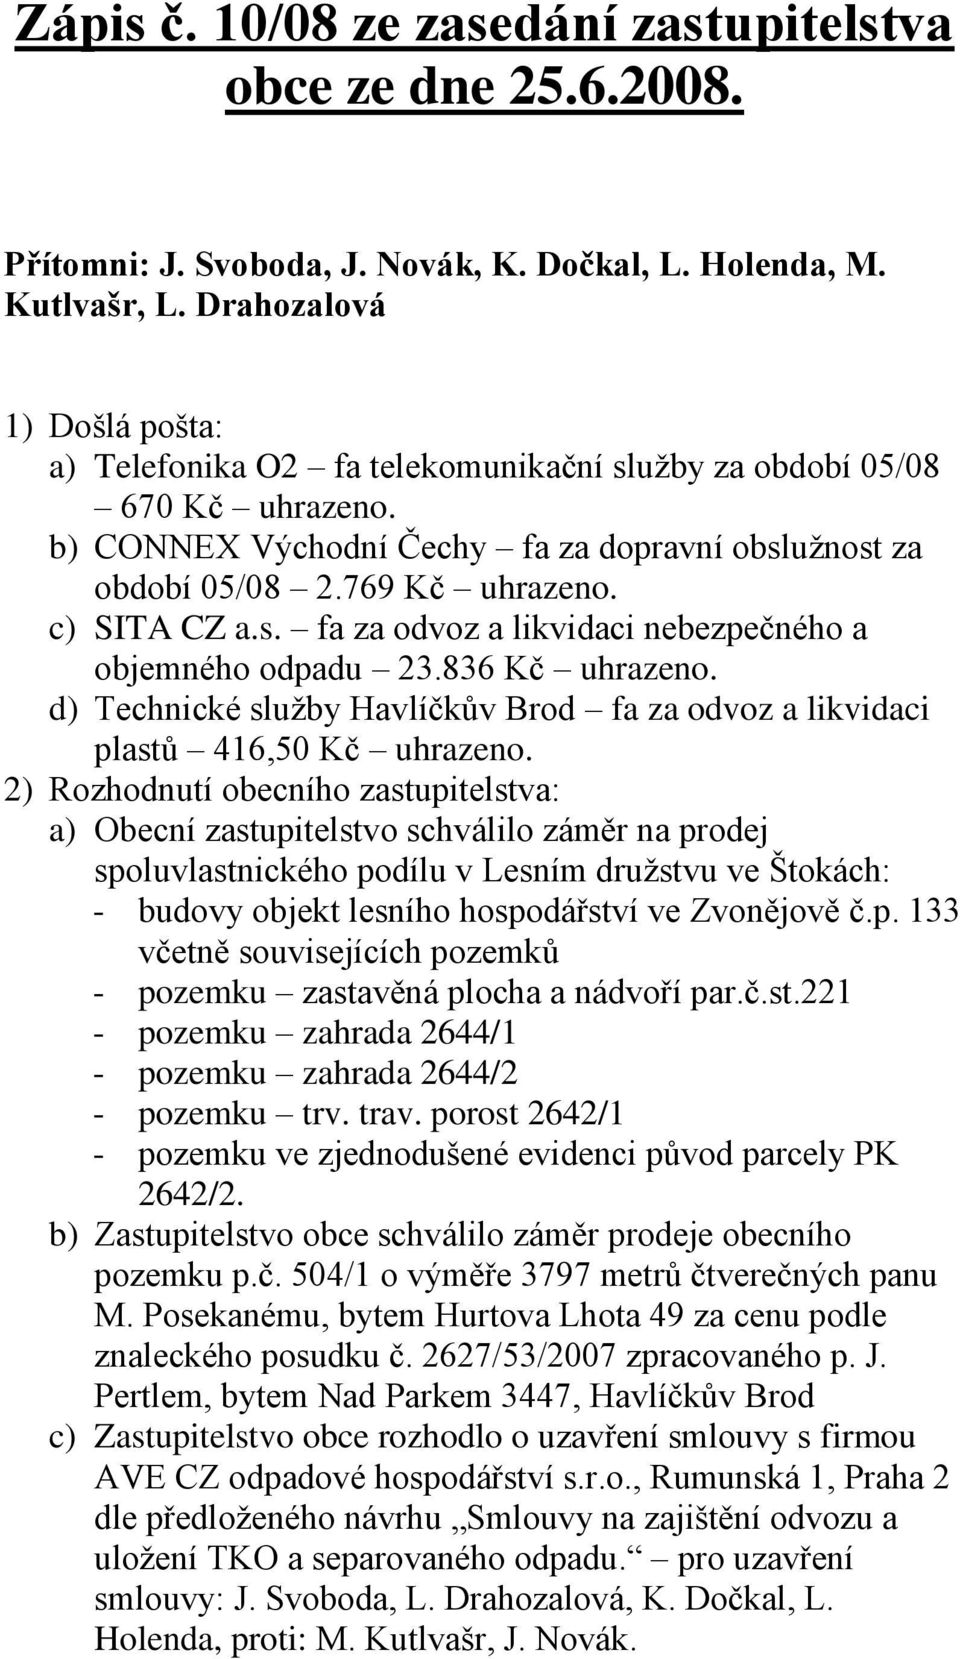 836 Kč uhrazeno. d) Technické sluţby Havlíčkův Brod fa za odvoz a likvidaci plastů 416,50 Kč uhrazeno.